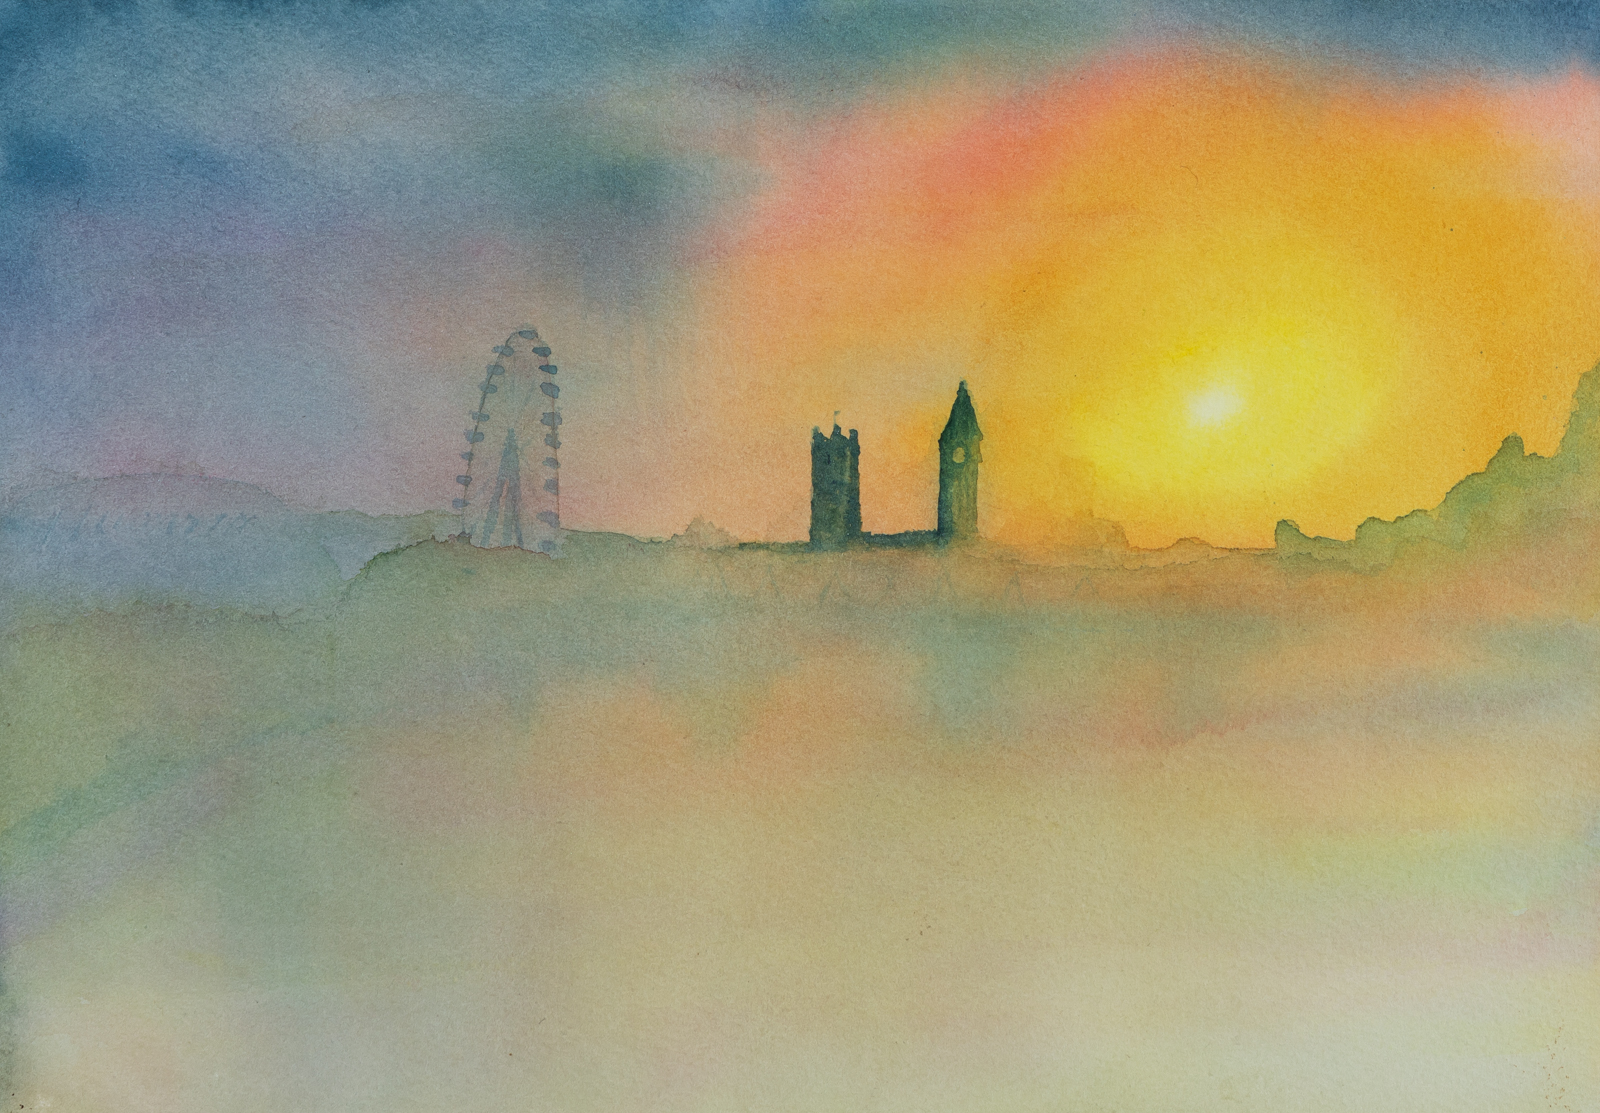 Gary Hindmarsh A Gaze on Waterloo Sunset (watercolour on paper) NFS. LTD edtion print of 25